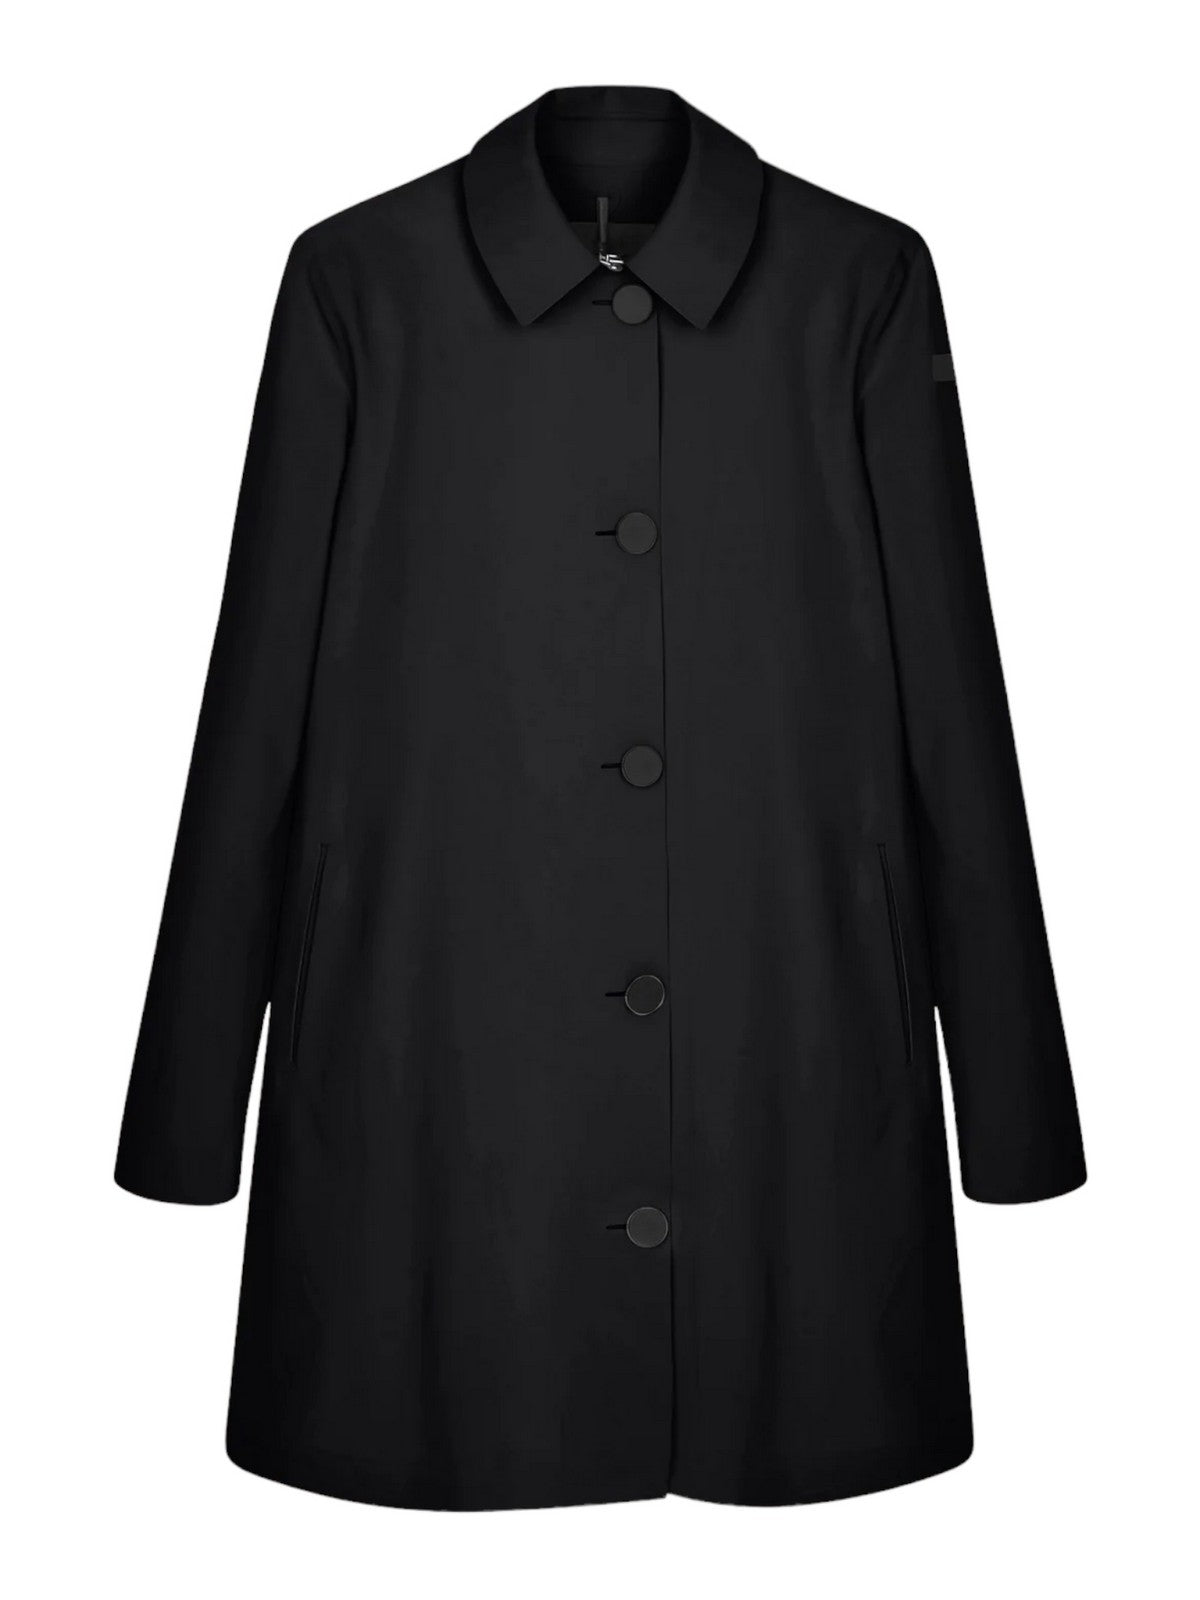 RRD Women's Jacket 23507 10 Black